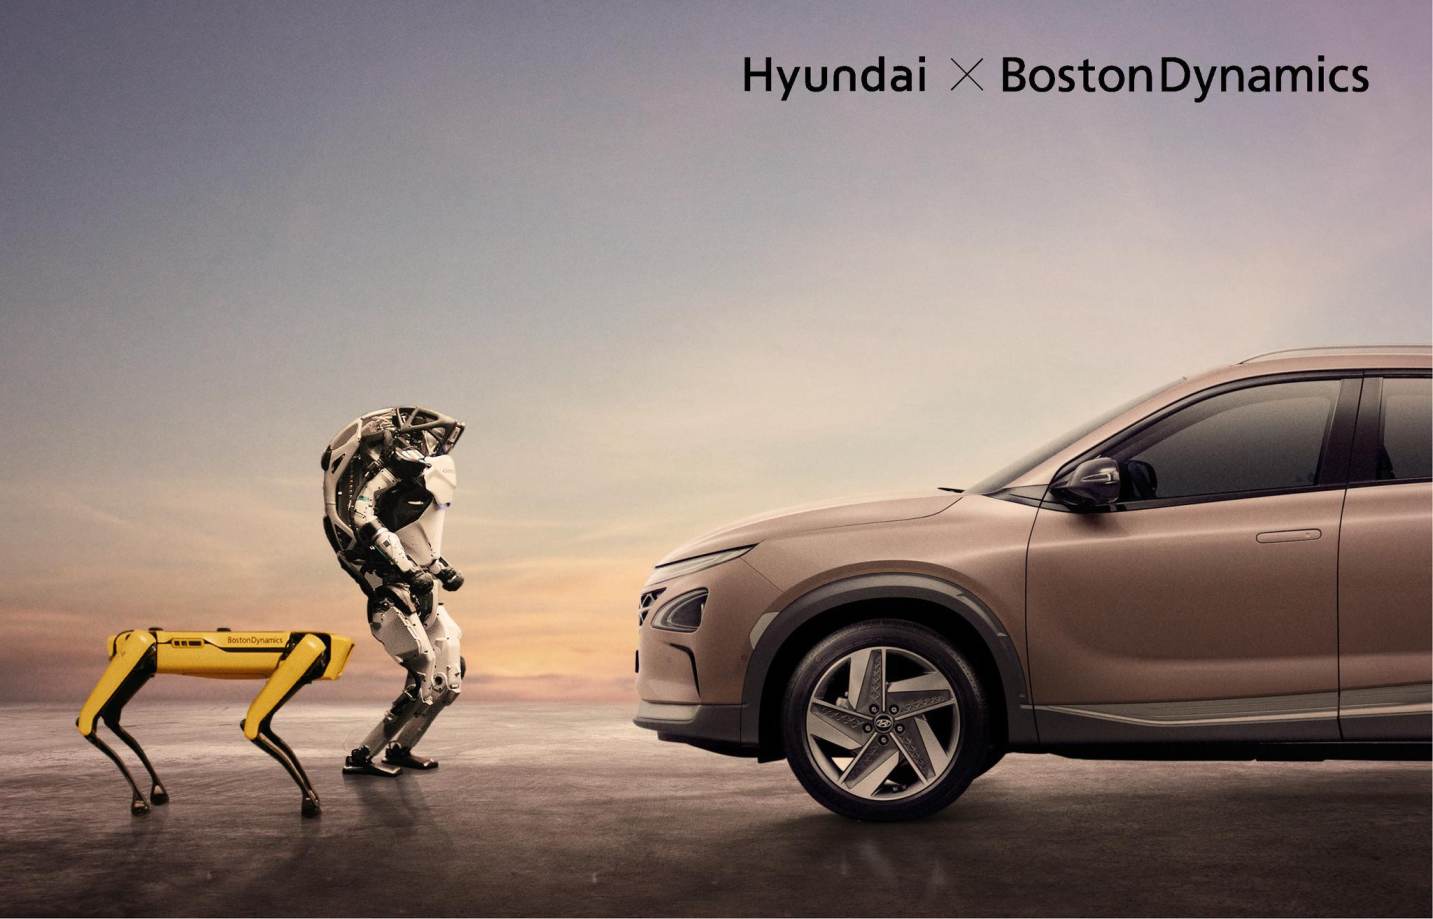 Hyundai Confirms its Acquisition of Boston Dynamics